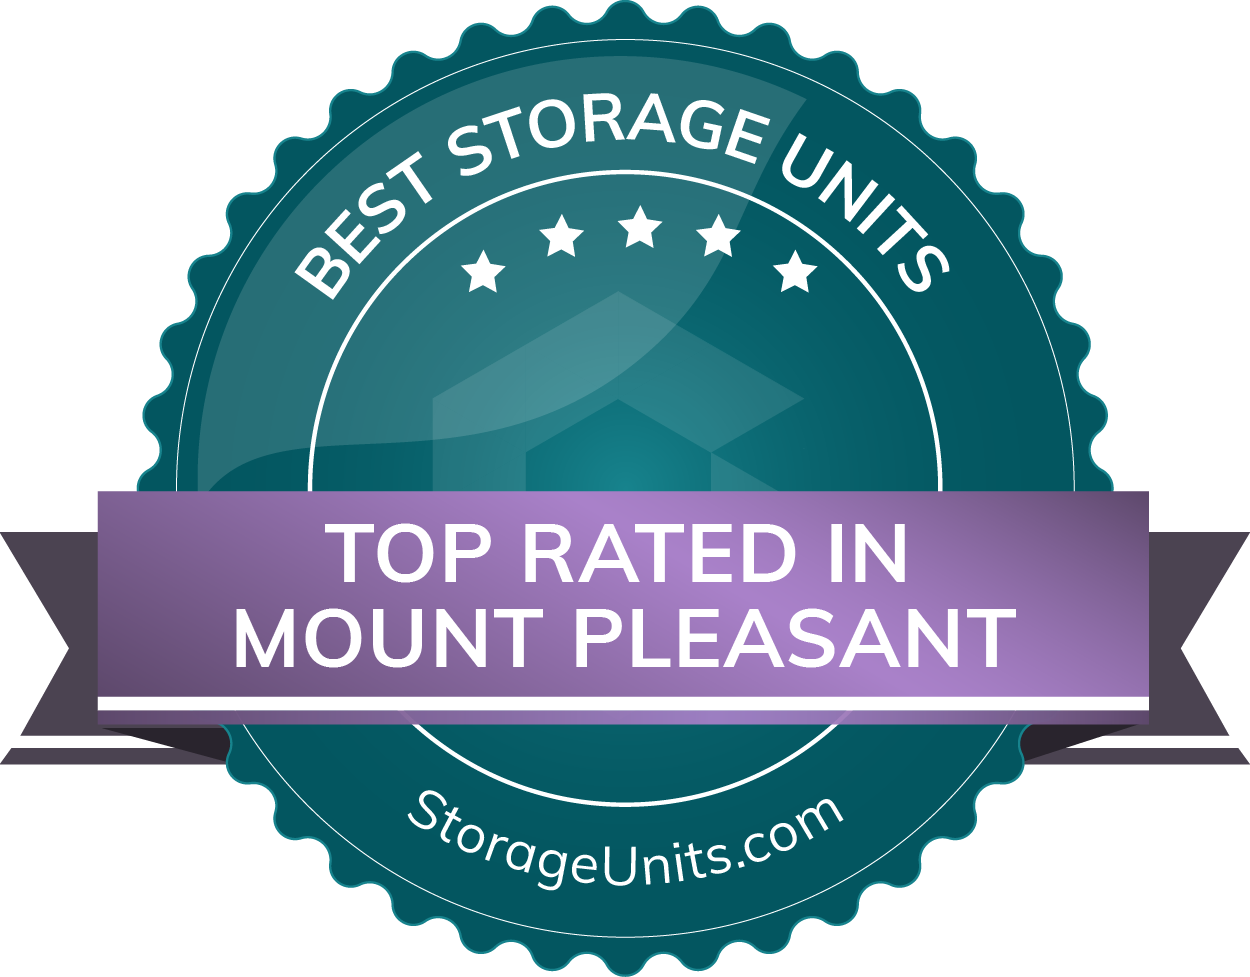 Best Self Storage Units in Mount Pleasant, South Carolina of 2022